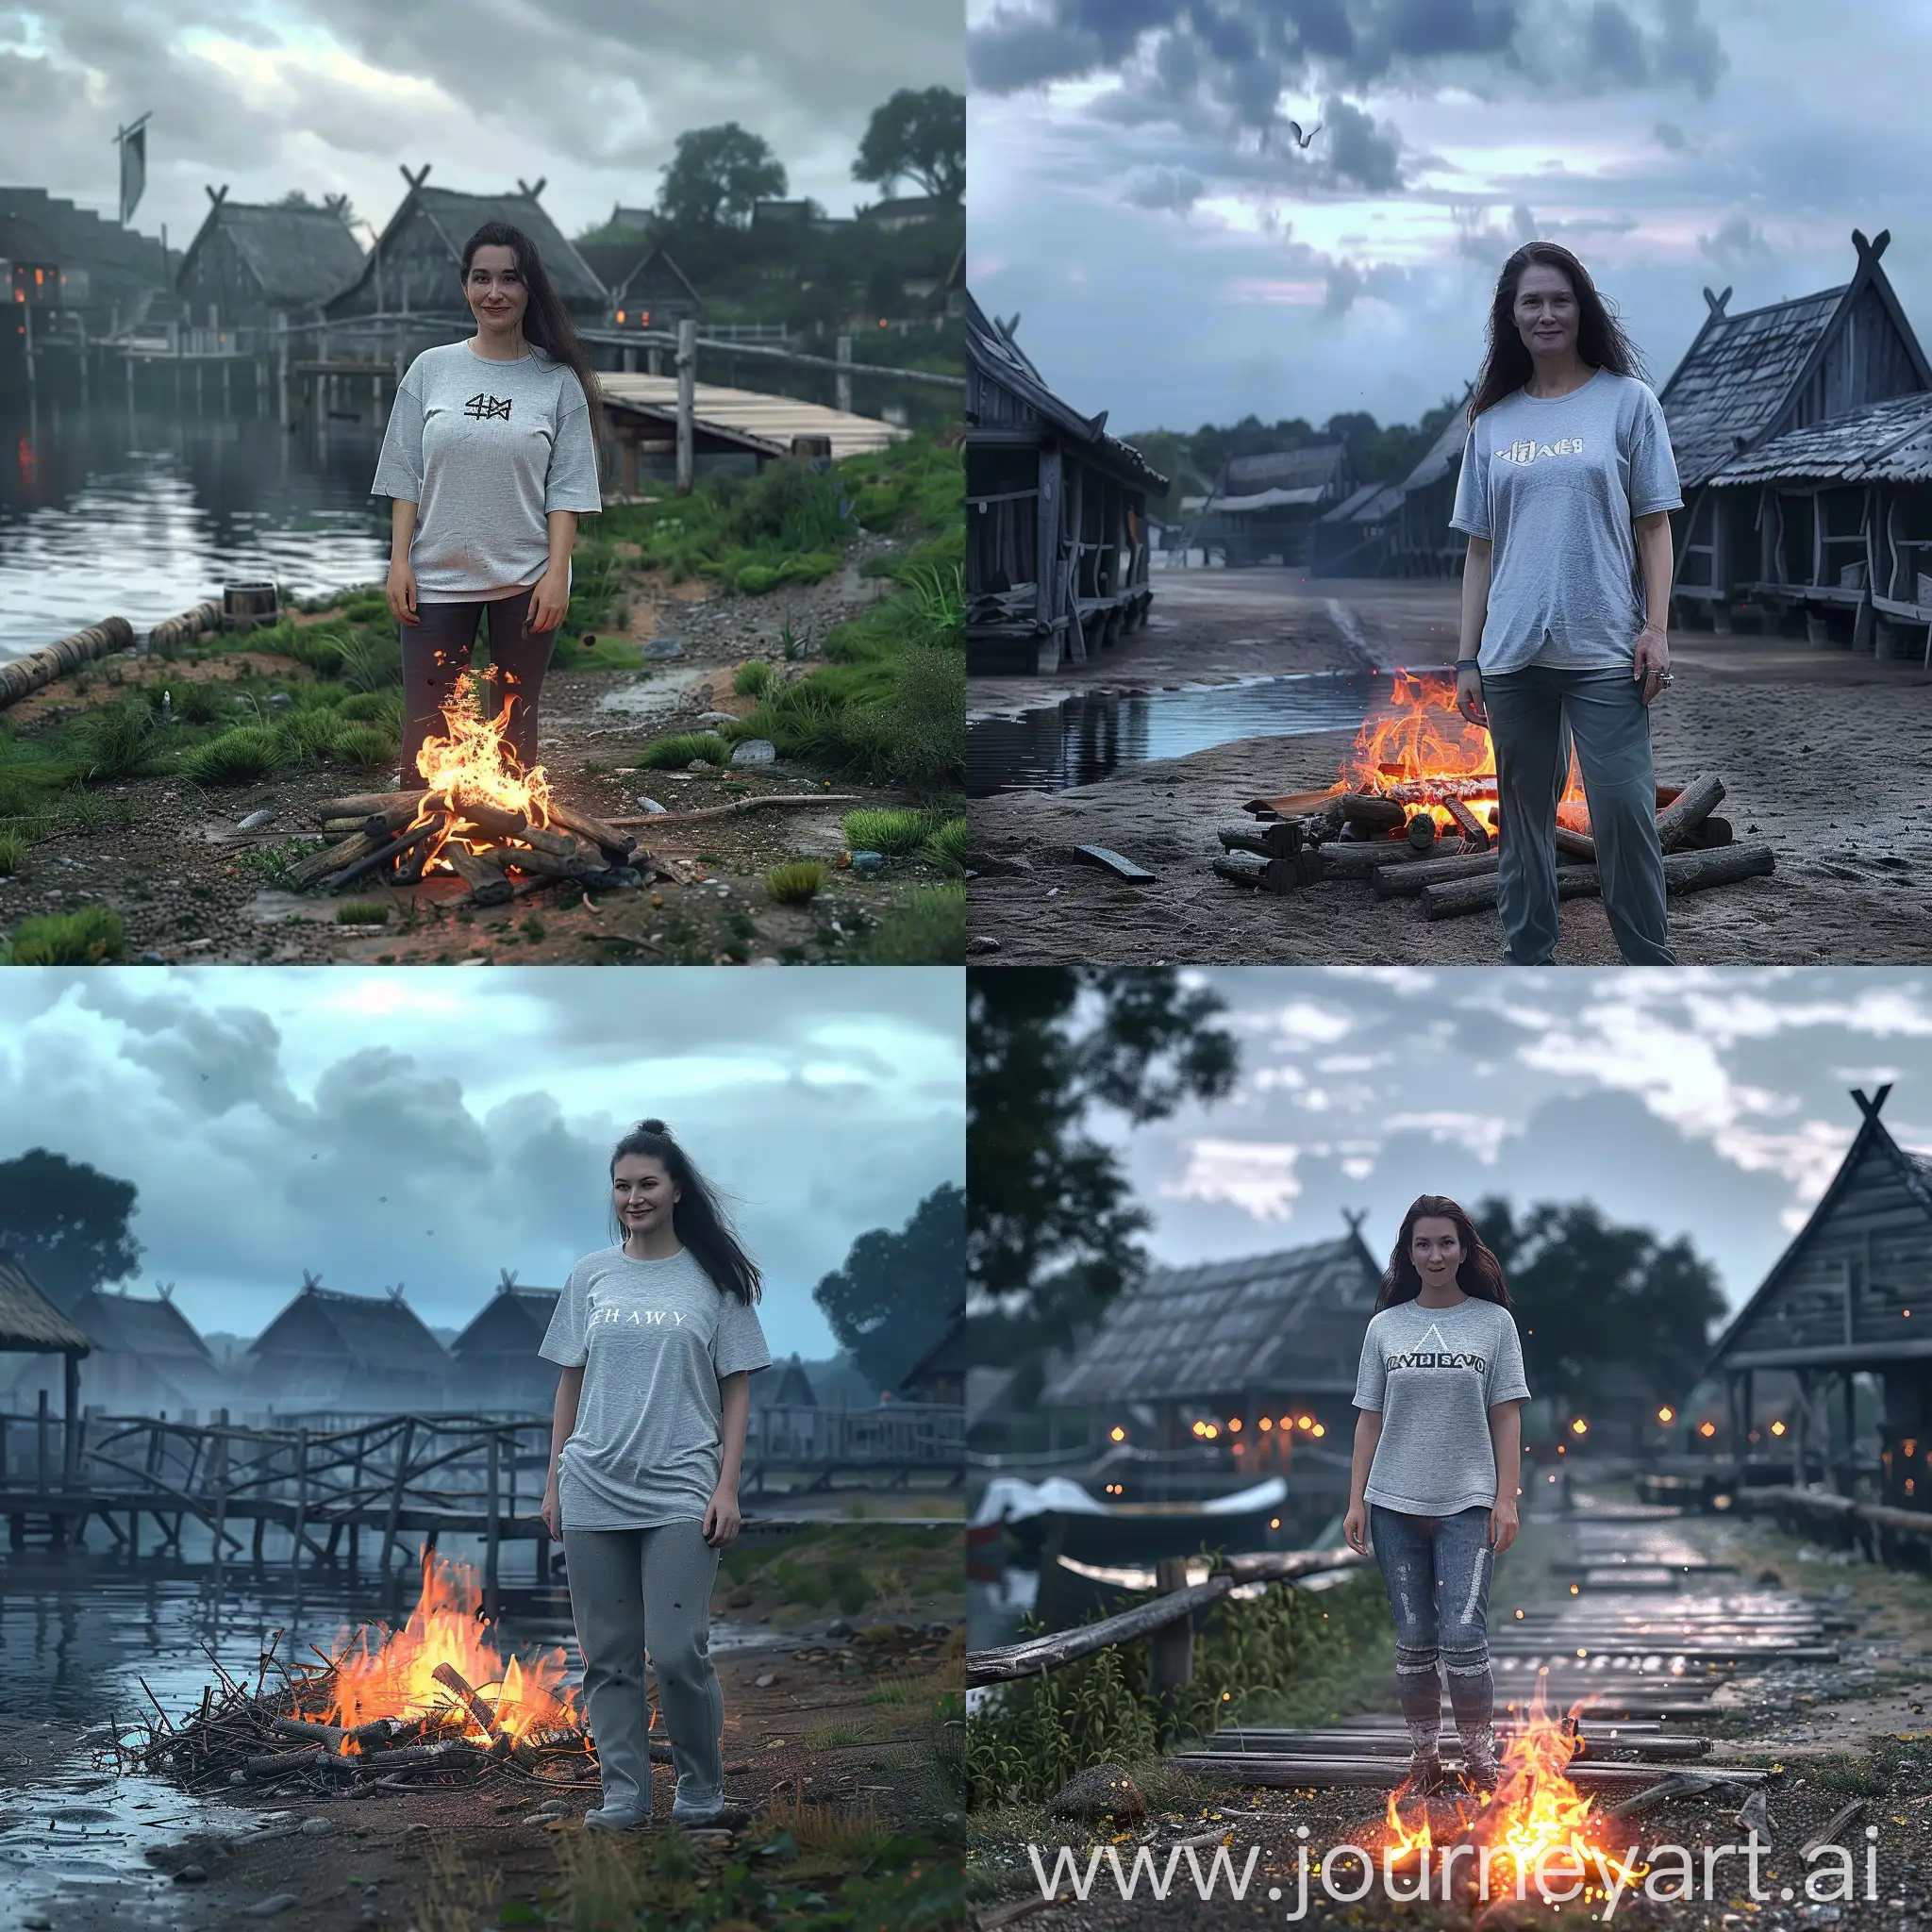 https://i.postimg.cc/N0LrmqkC/IMG-20240325-150302-329.jpg, Viking style, fire, village background, realism, 4k